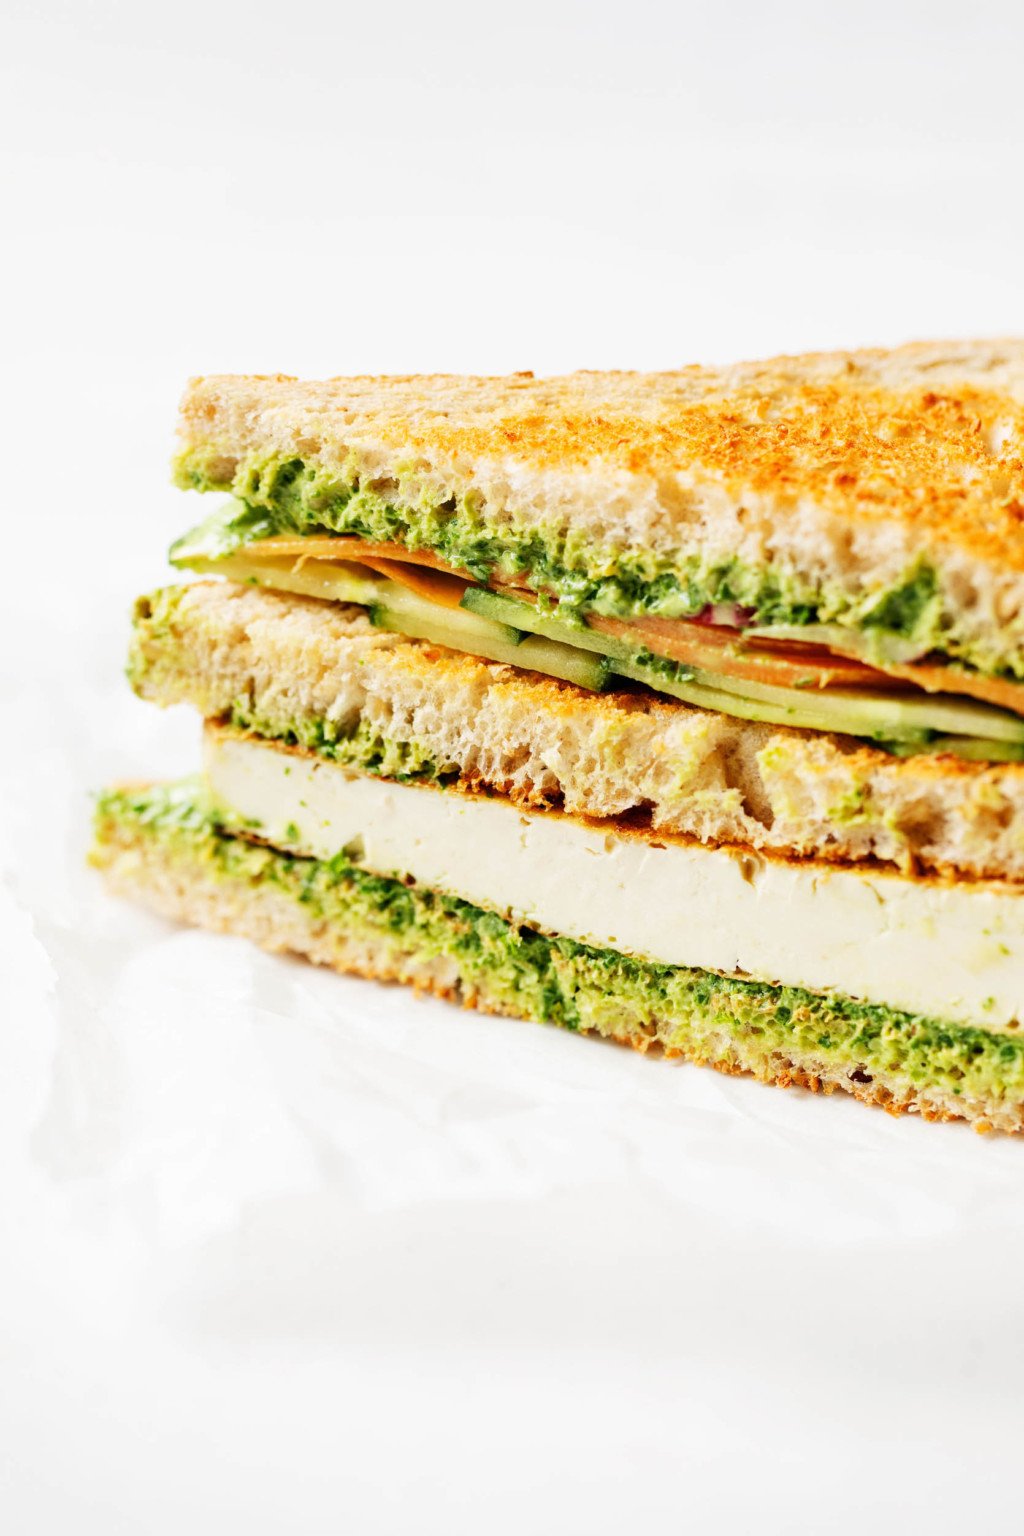 A crosswise slice of a three-layer sandwich on whole grain bread.